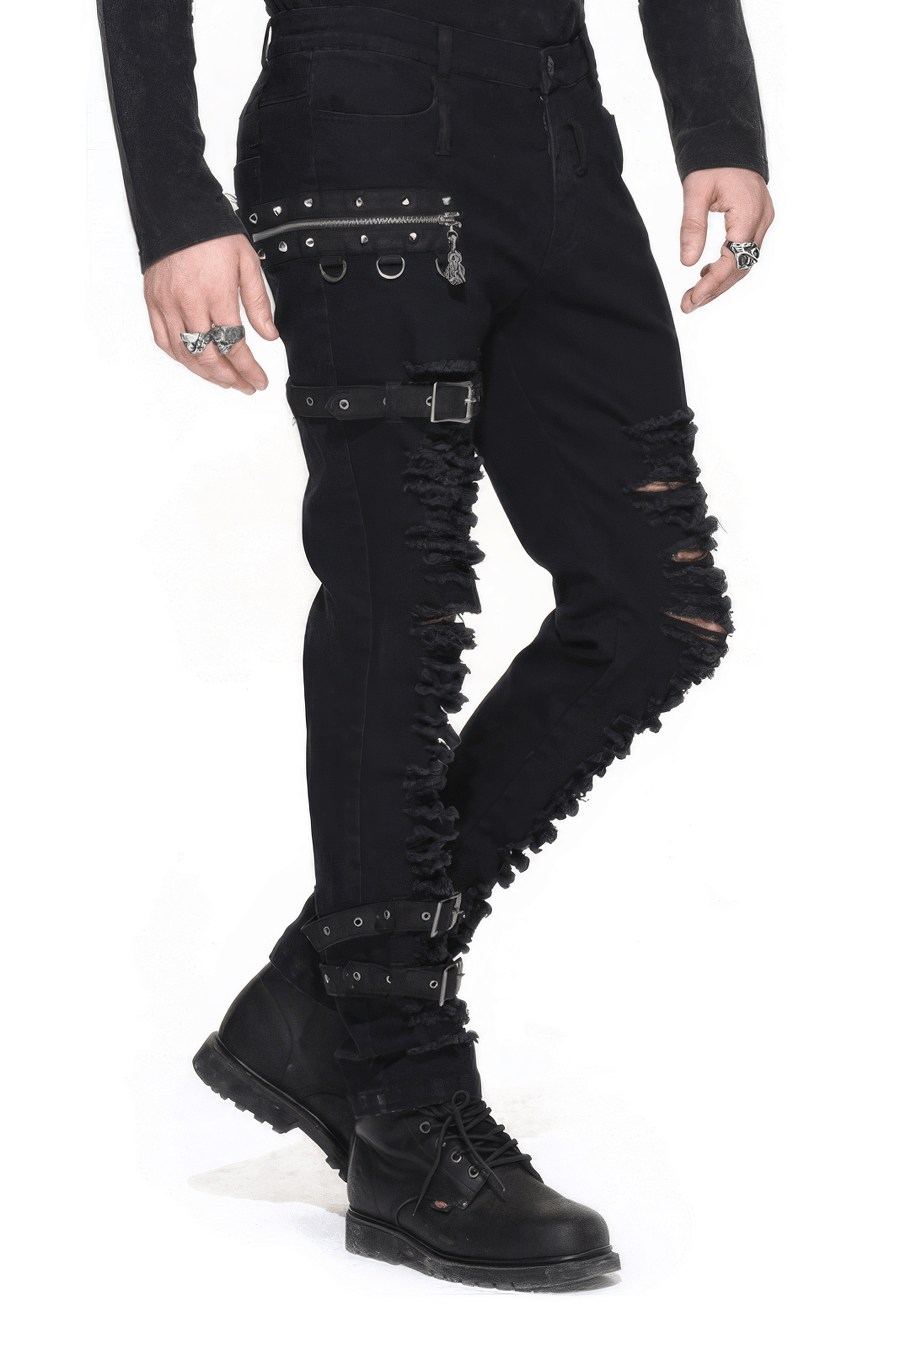 Steampunk Men Black Gothic Pants / Rock Style Slim Fit Trousers / Ripped Pencil Pants